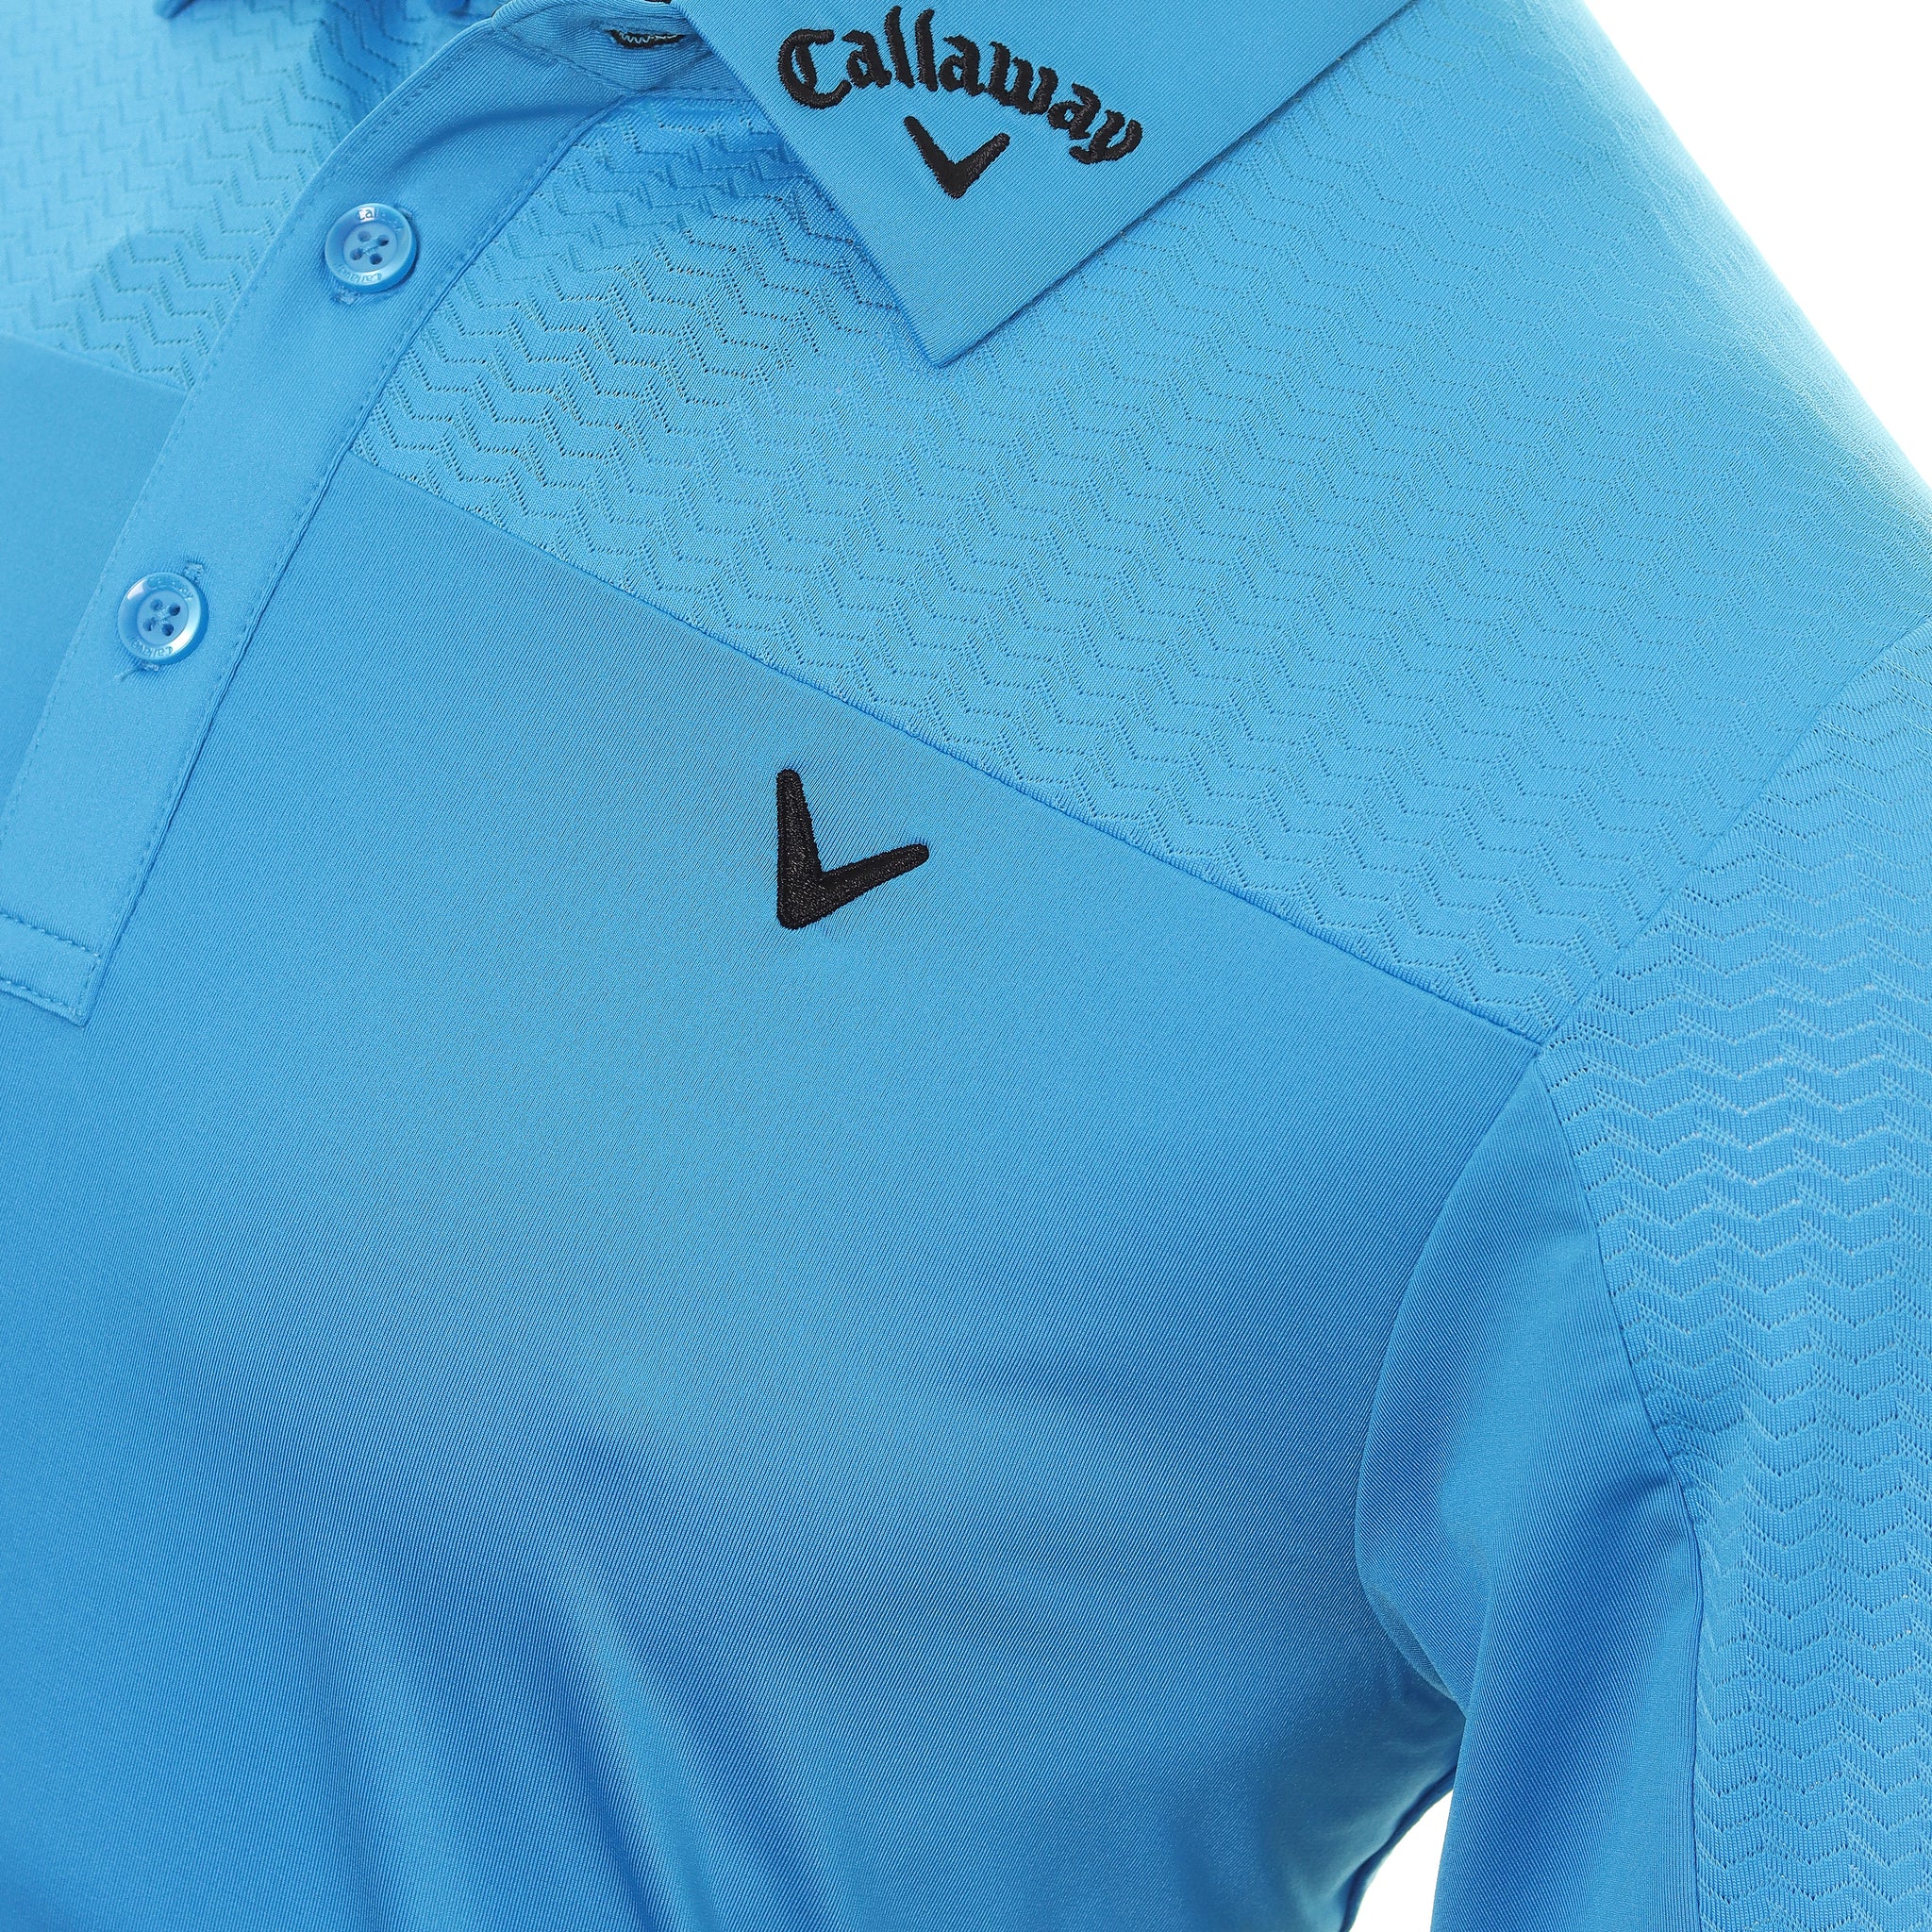 Callaway Golf Odyssey Ventilated Block Shirt